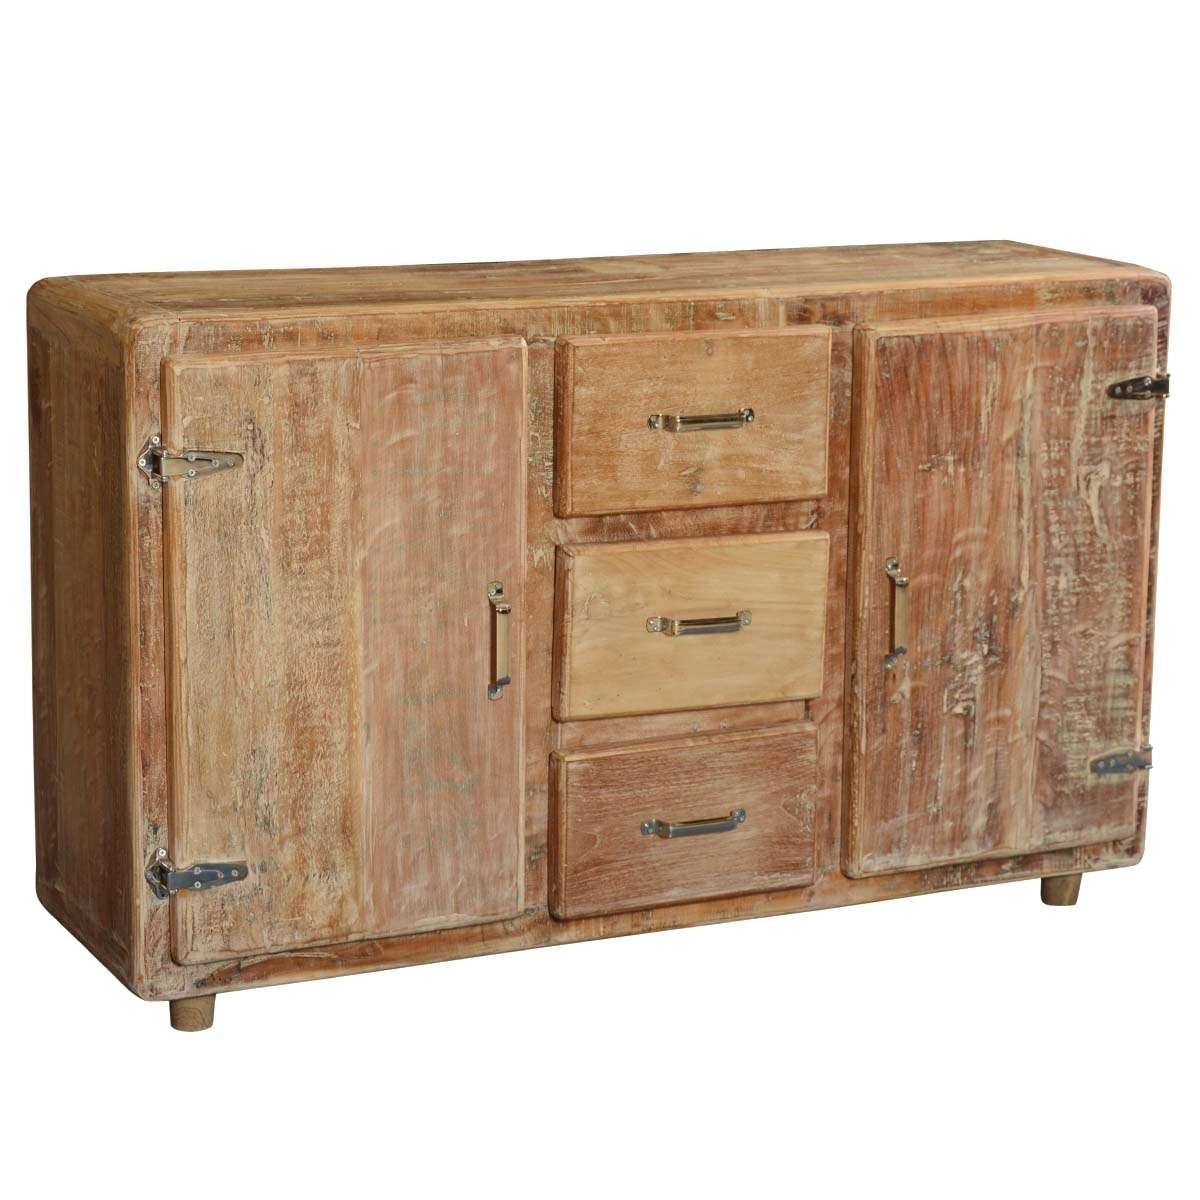 Rounded Corners Reclaimed Wood 3 Drawer Rustic Sideboard Regarding Rustic Sideboards Furniture (View 13 of 20)